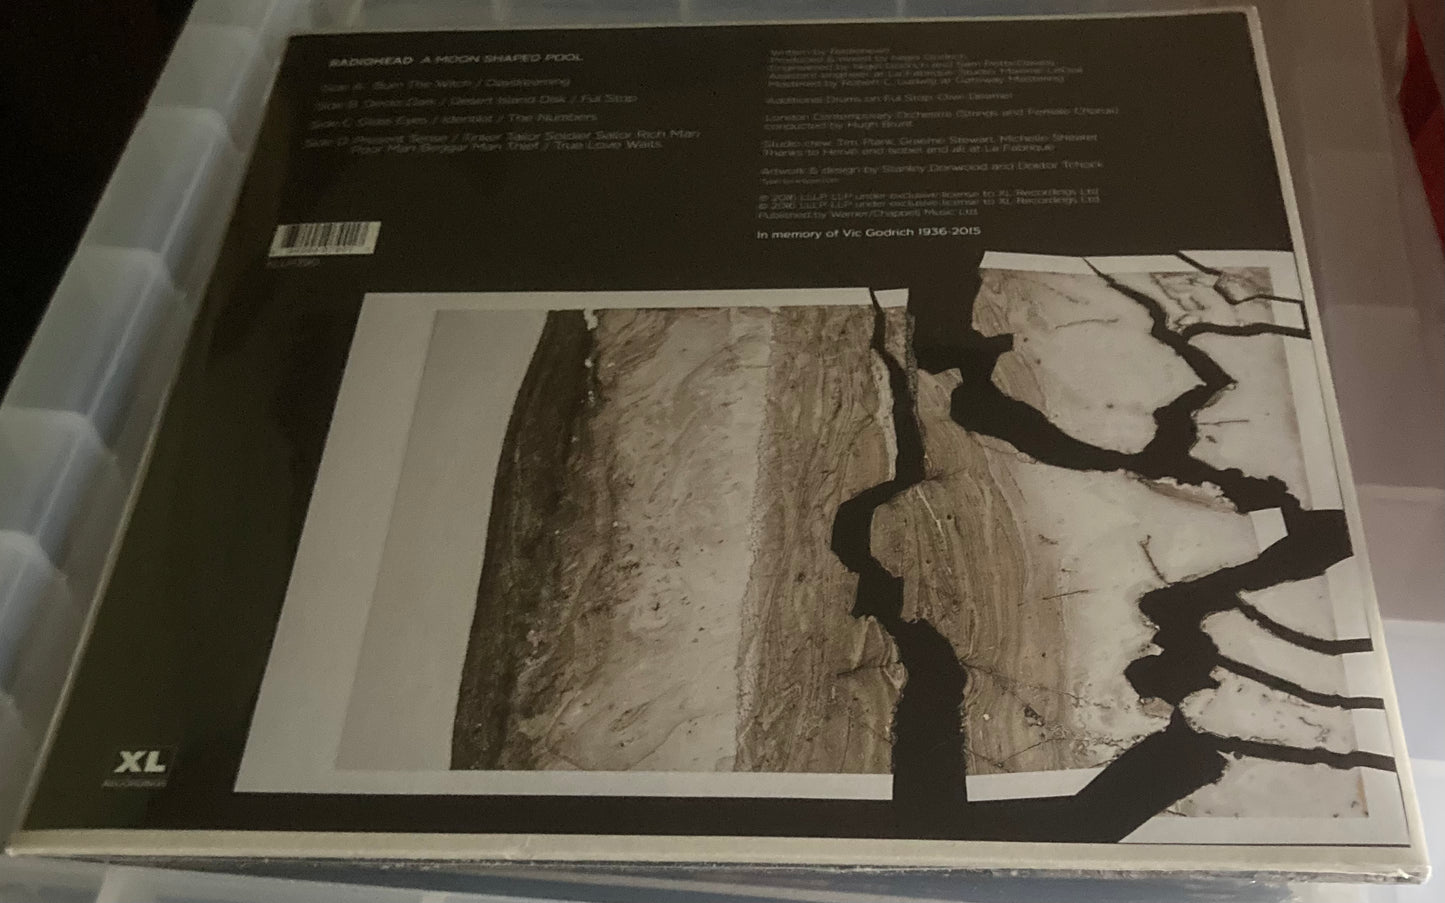 The back of 'Radiohead - A Moon Shaped Pool' on vinyl